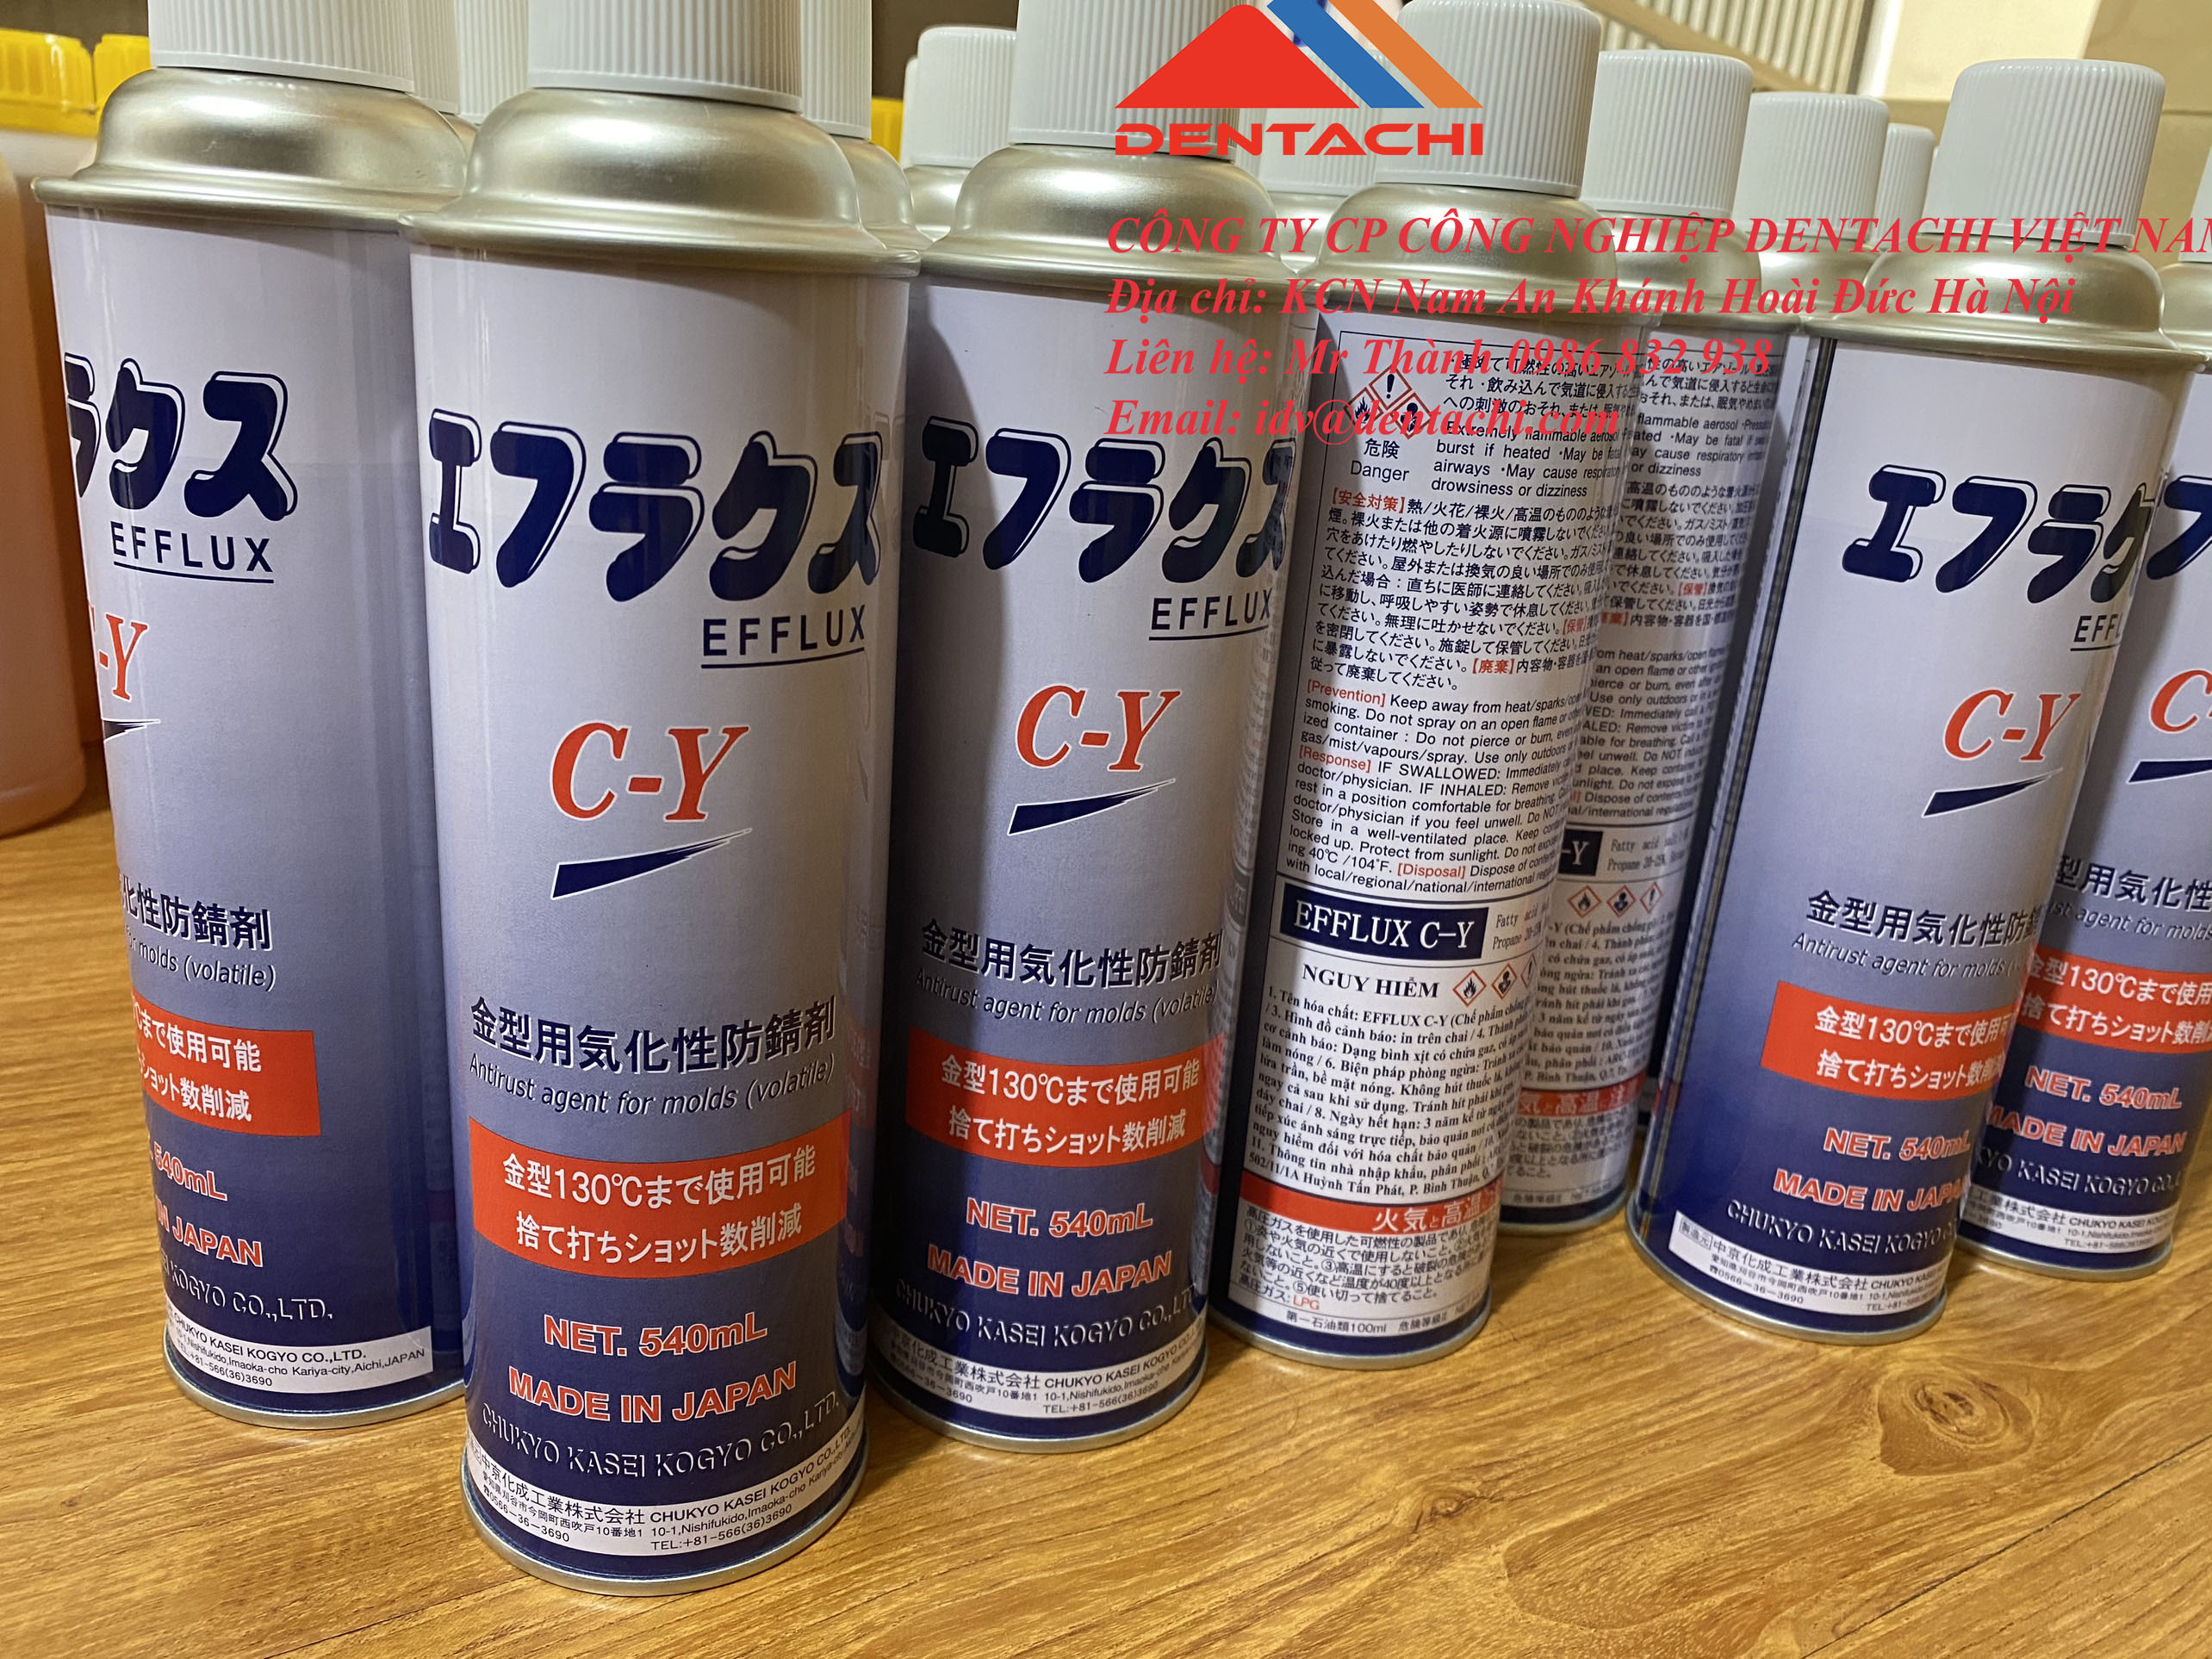 EFFLUX C-Y Chukyo Kasei Kogyo Co., LTD 10-1 Nishifukido, Imaoka-cho, Kariya, Aichi Prefecture, Japan.  EFFLUX C-Y / Chất chống rỉ cho khuôn không dầu (dạng khí)